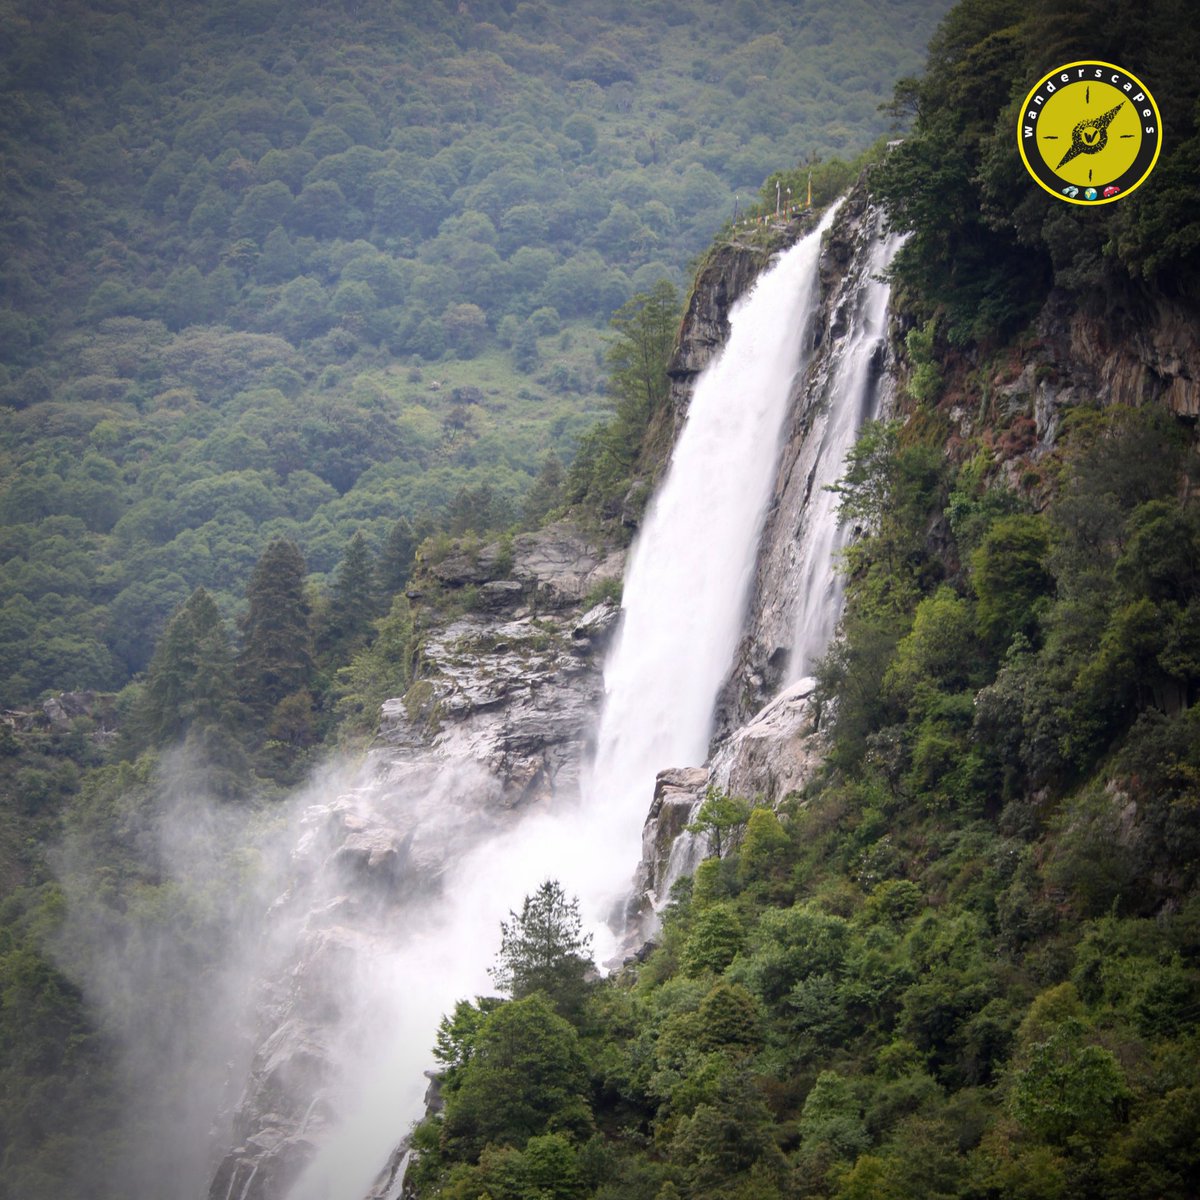 Nature does not hurry, yet everything is accomplished - Lao Tzu

#waterfall #nohkalikaifalls #northeastindia #meghalaya #naturalworld #beautifulnature #naturephotography #explorenortheastindia #trips #journey